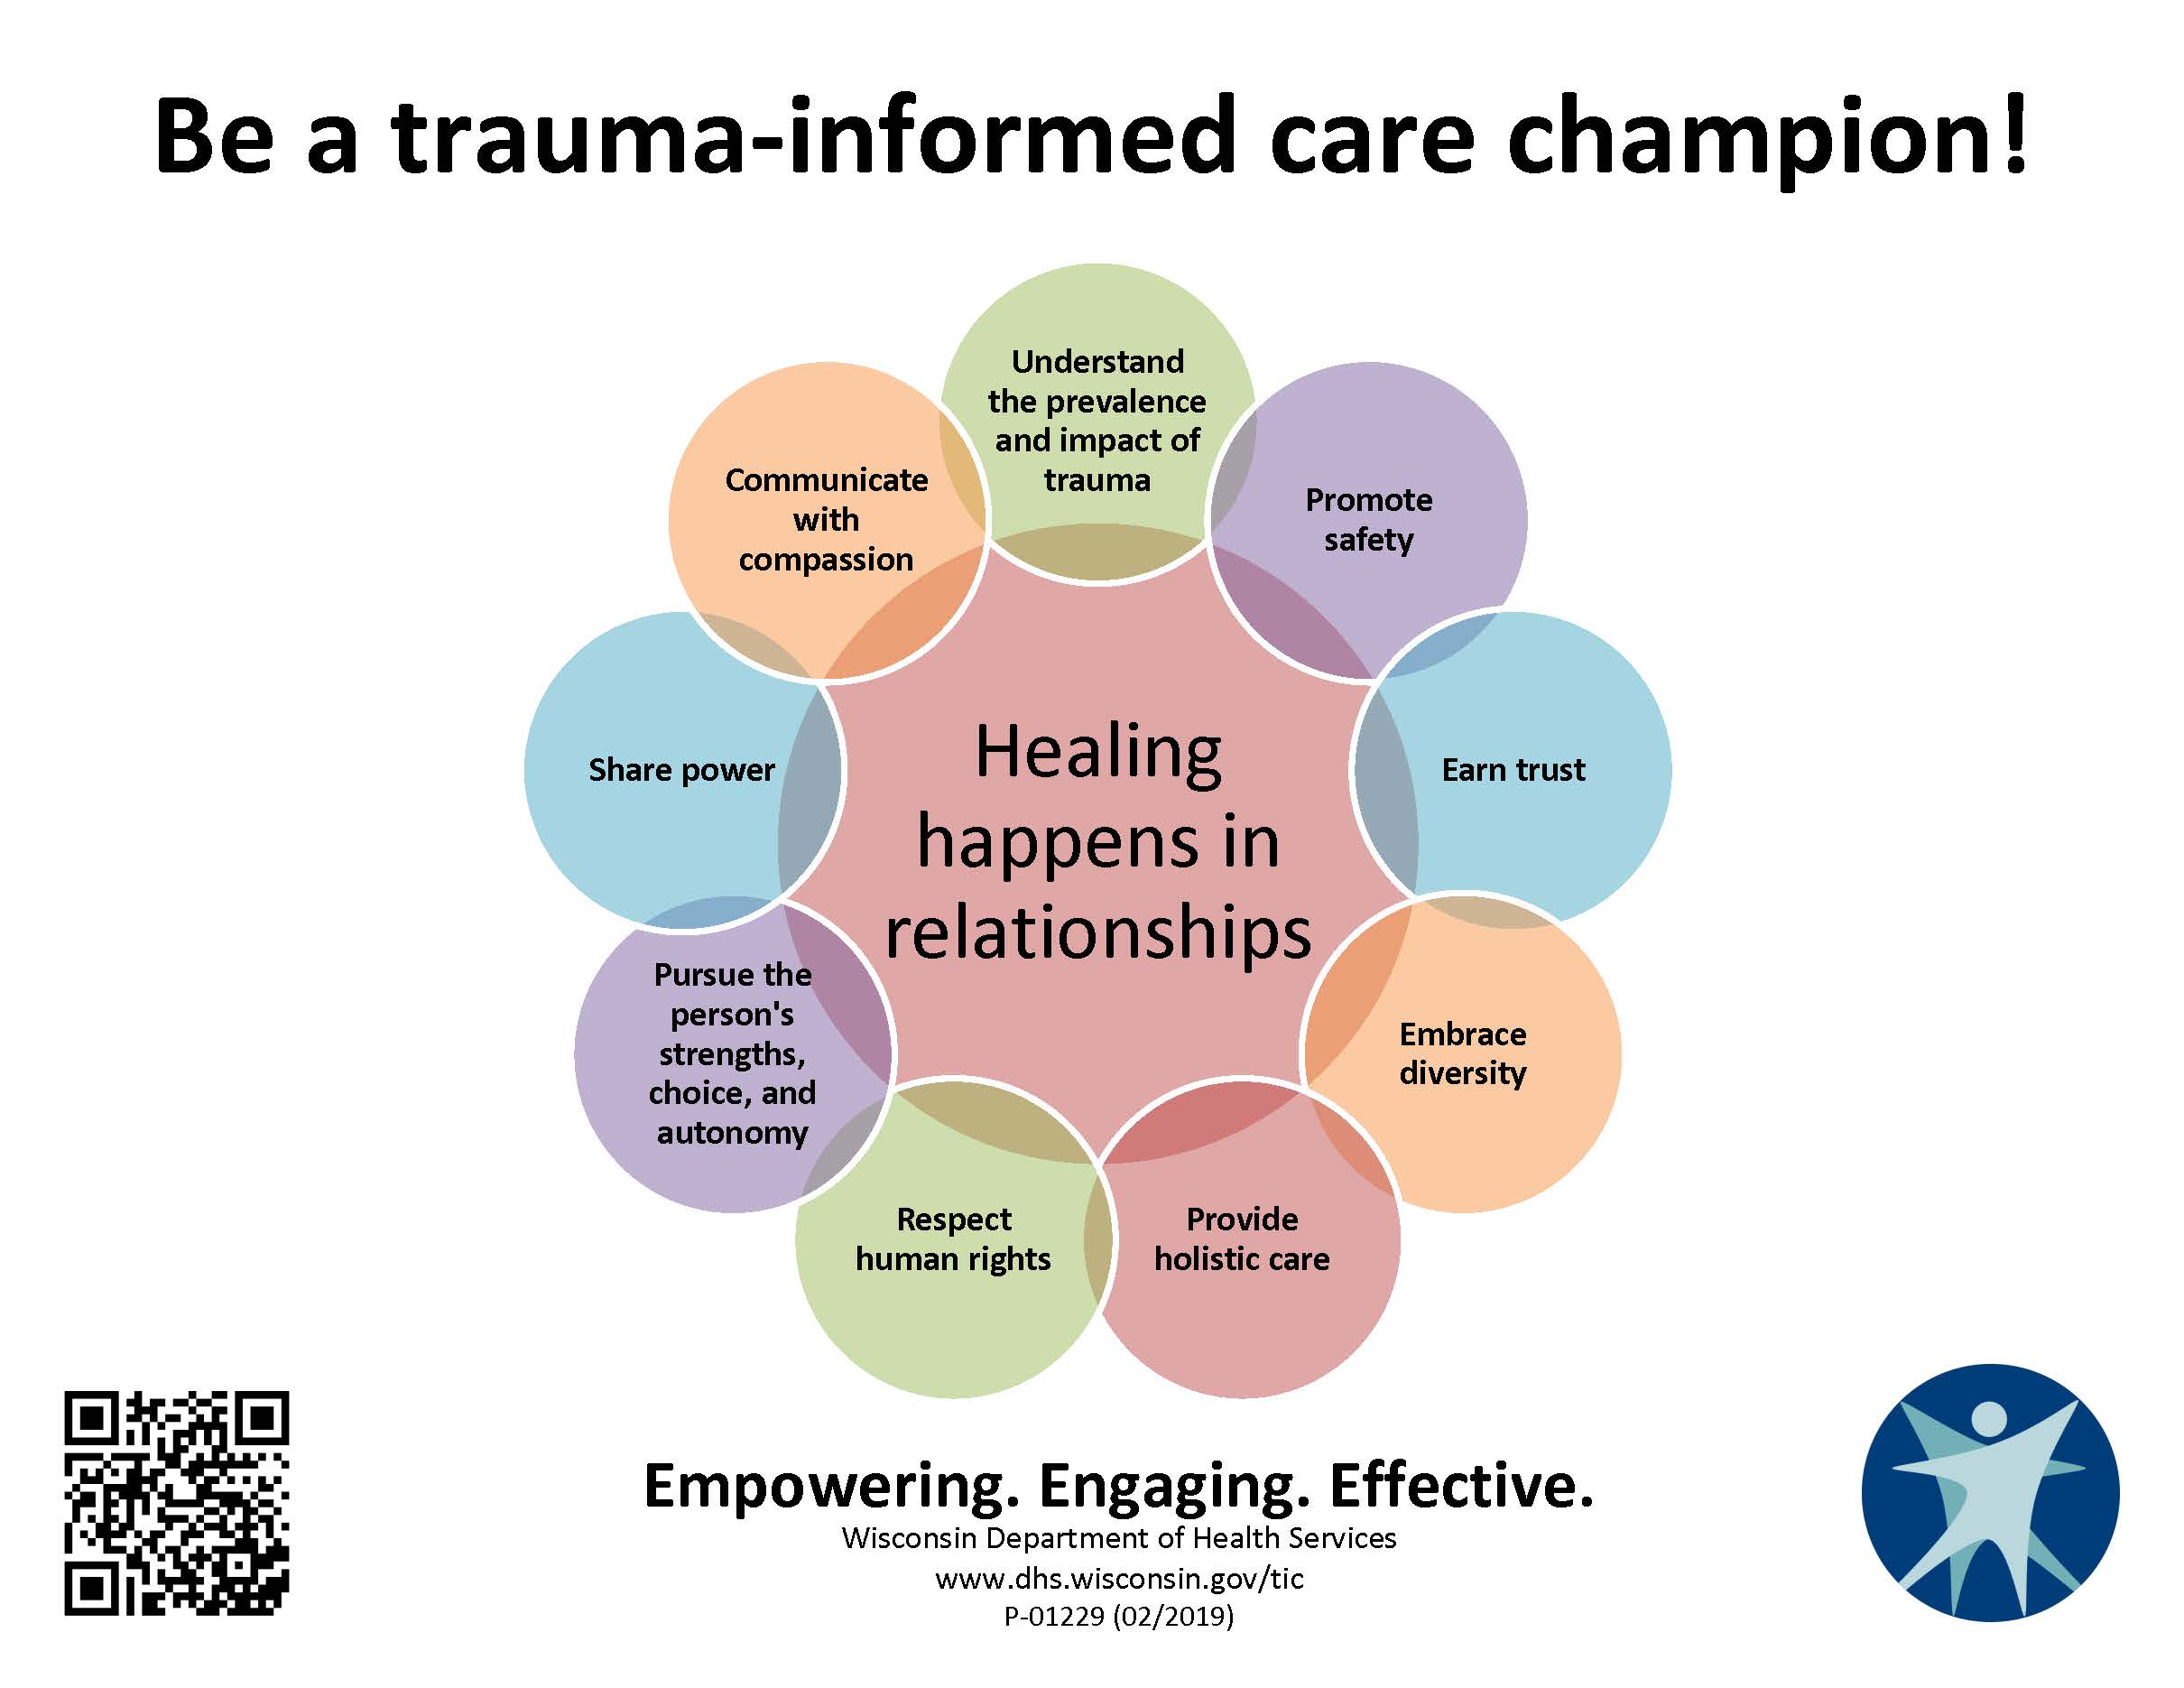 Be a trauma-informed care champion. 